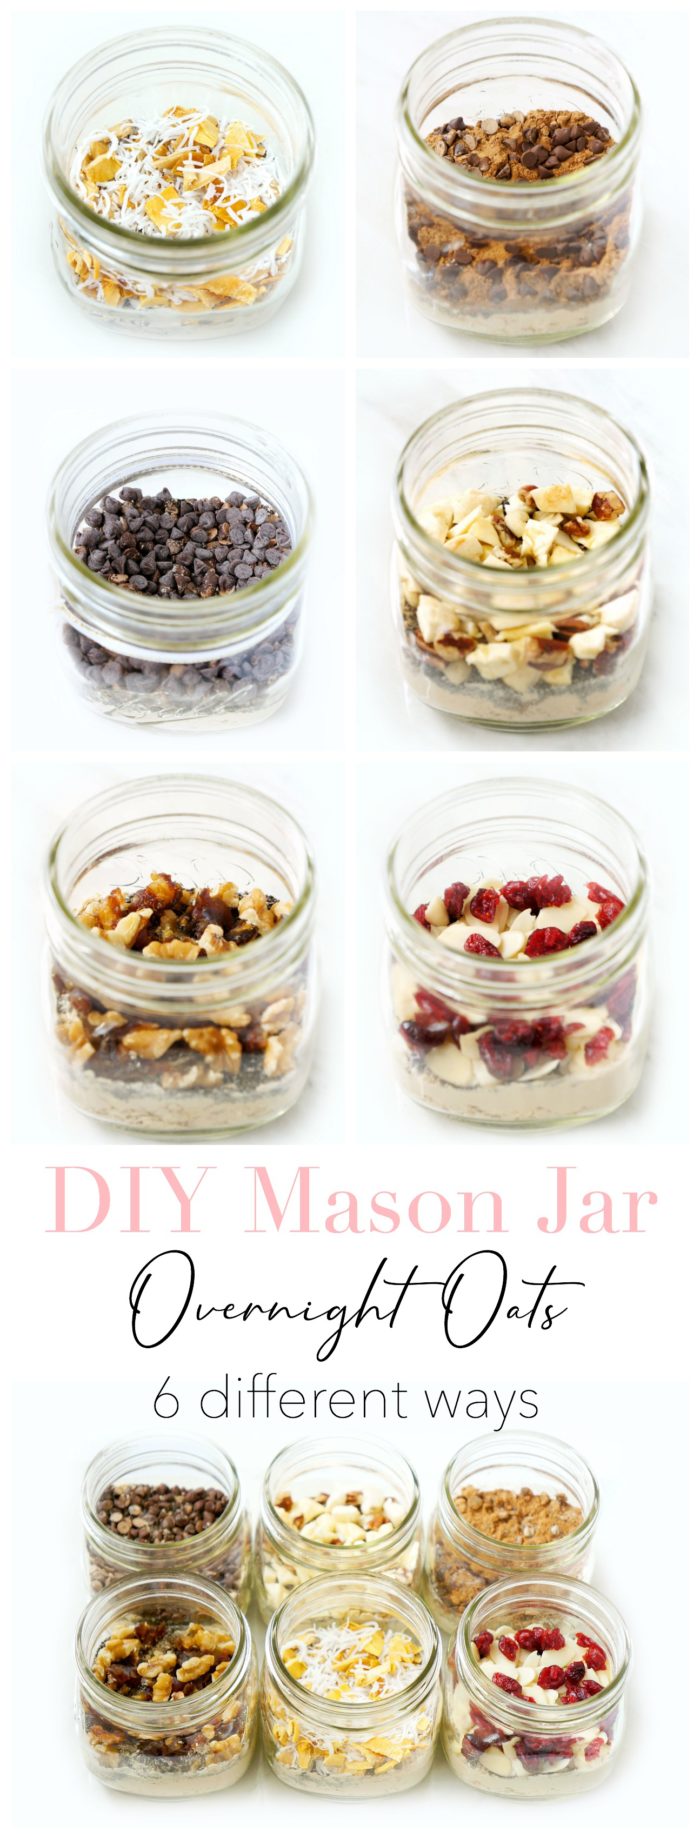 DIY Mason Jar Overnight Oat Recipes